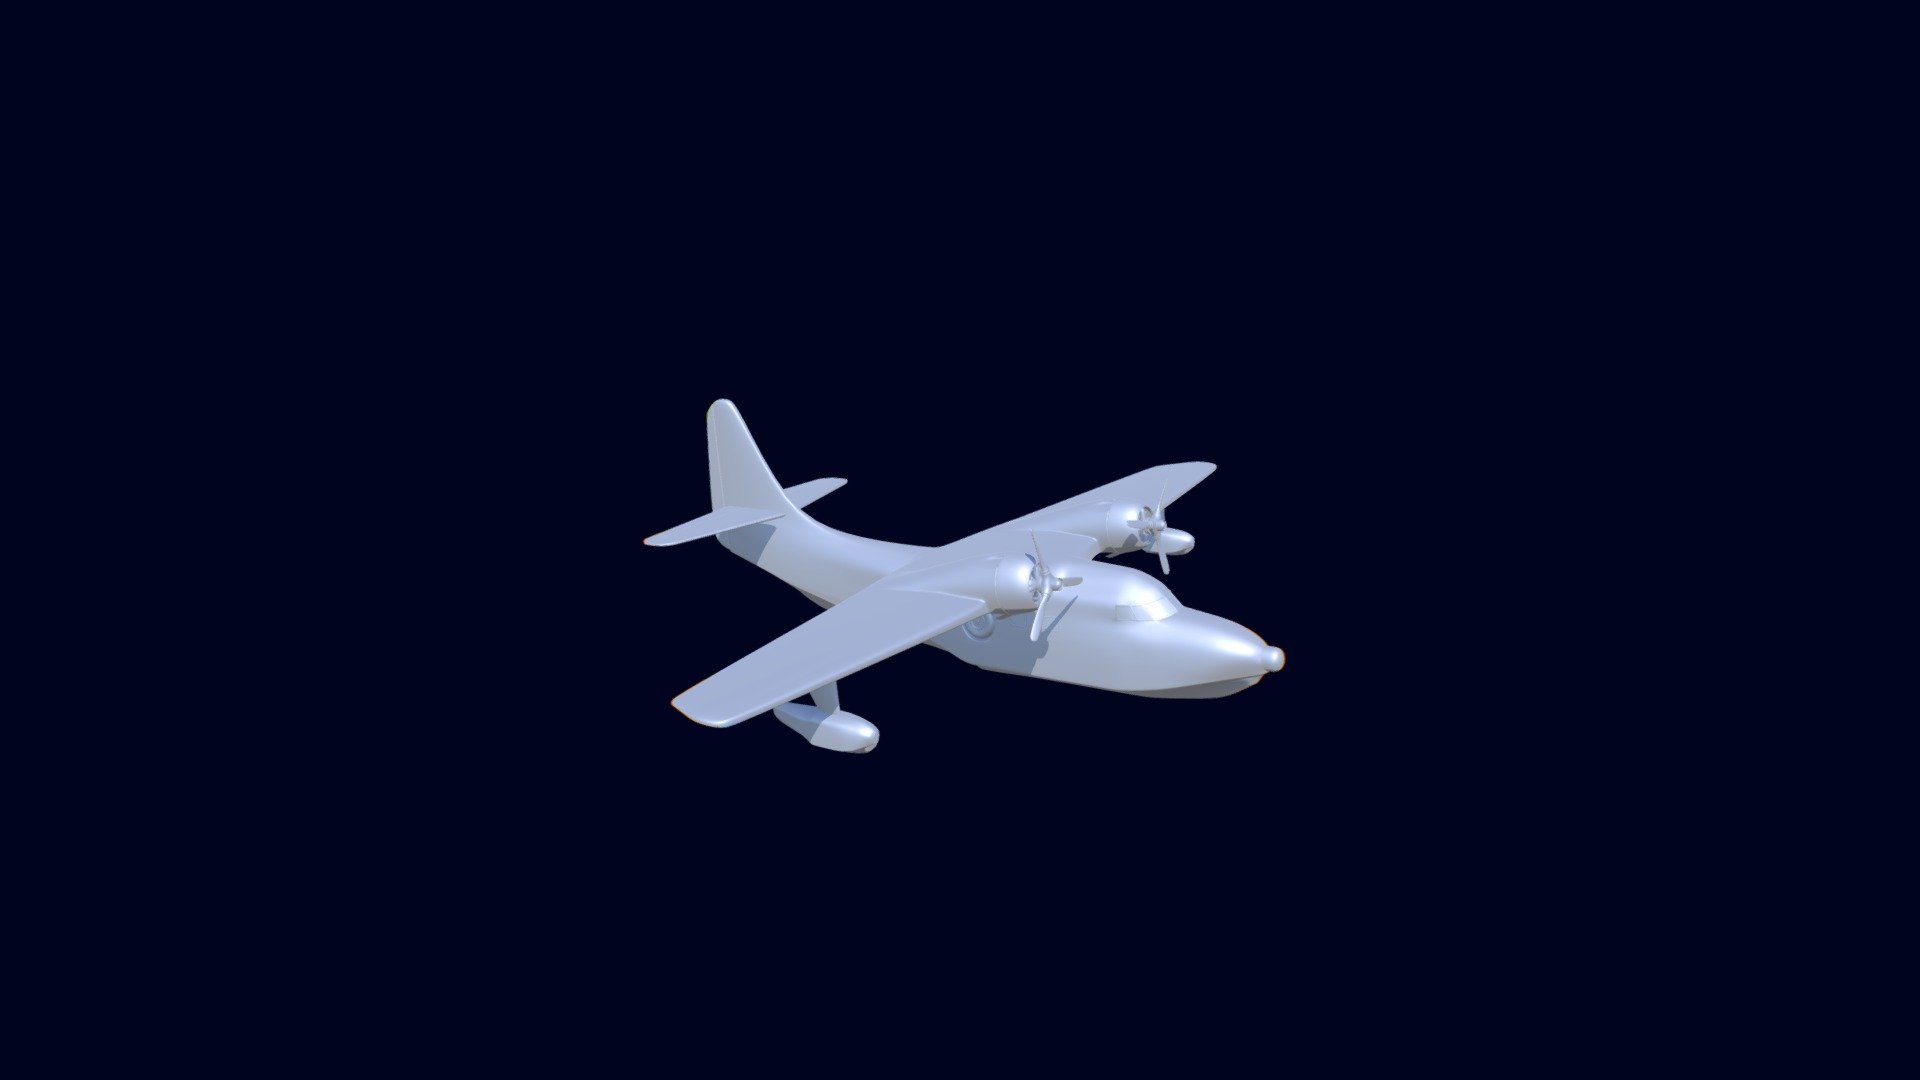 Simple untextured model of a seaplane 3d model